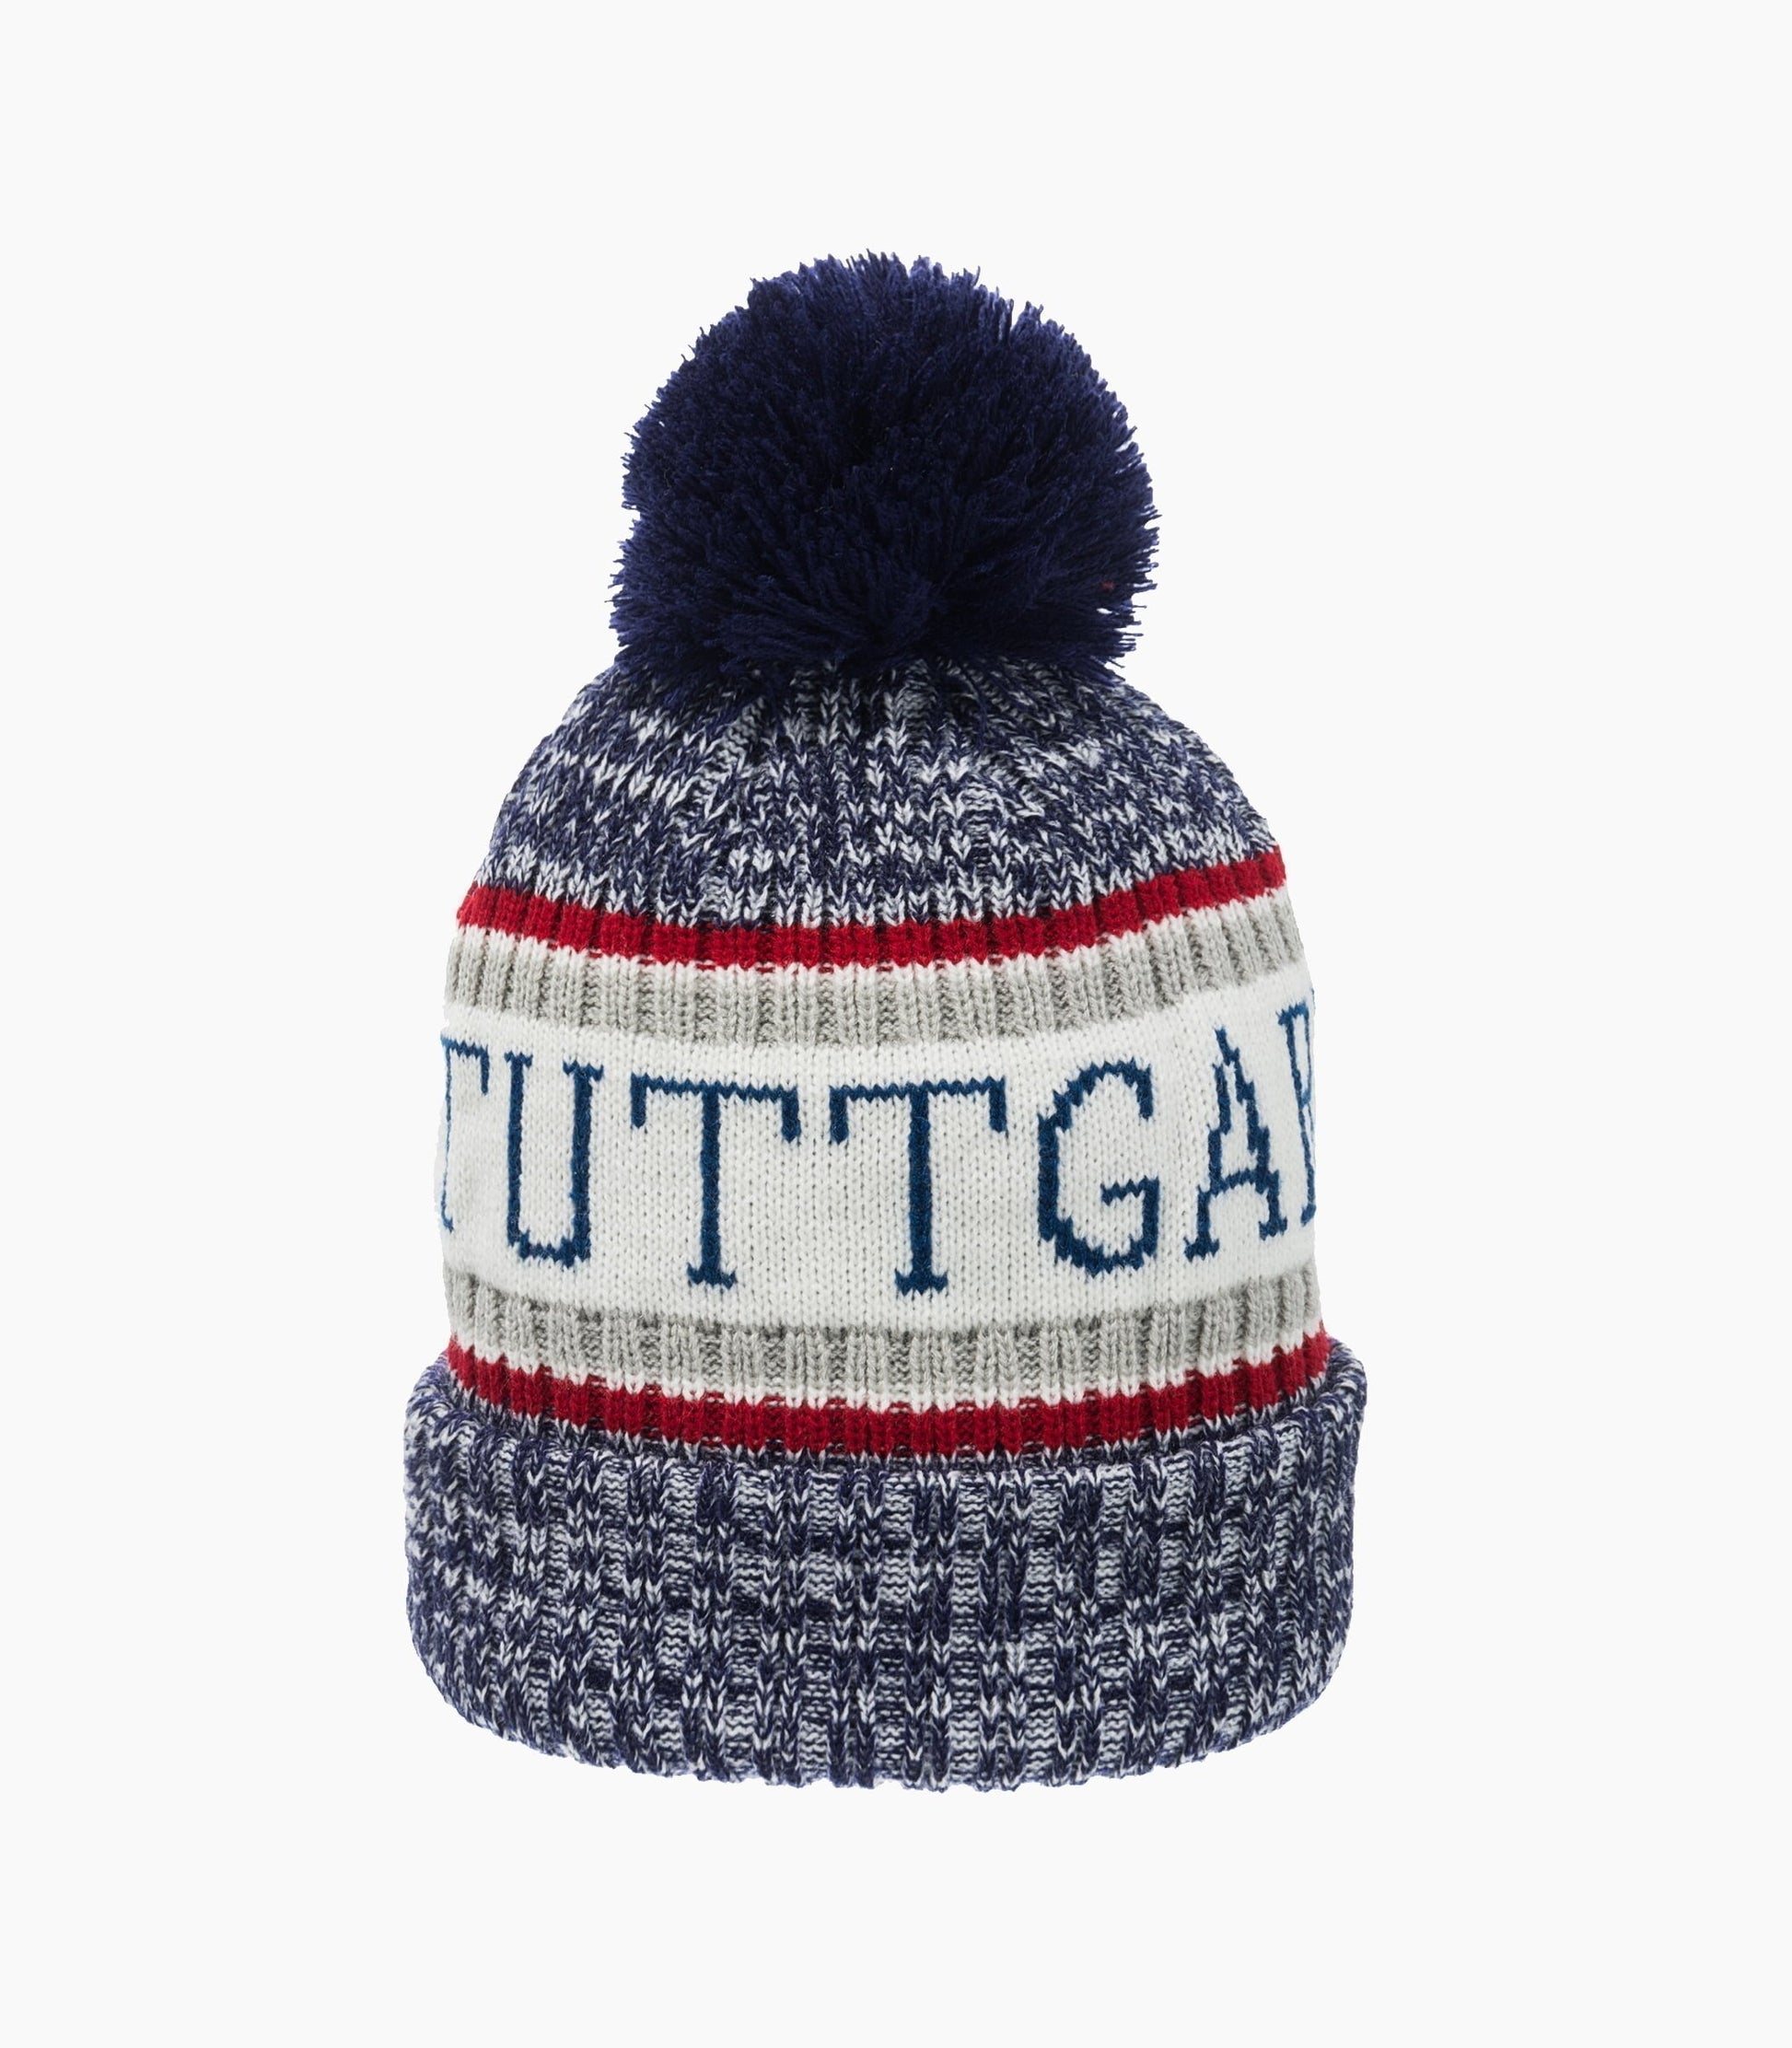 Stuttgart Winter hat - Robin Ruth